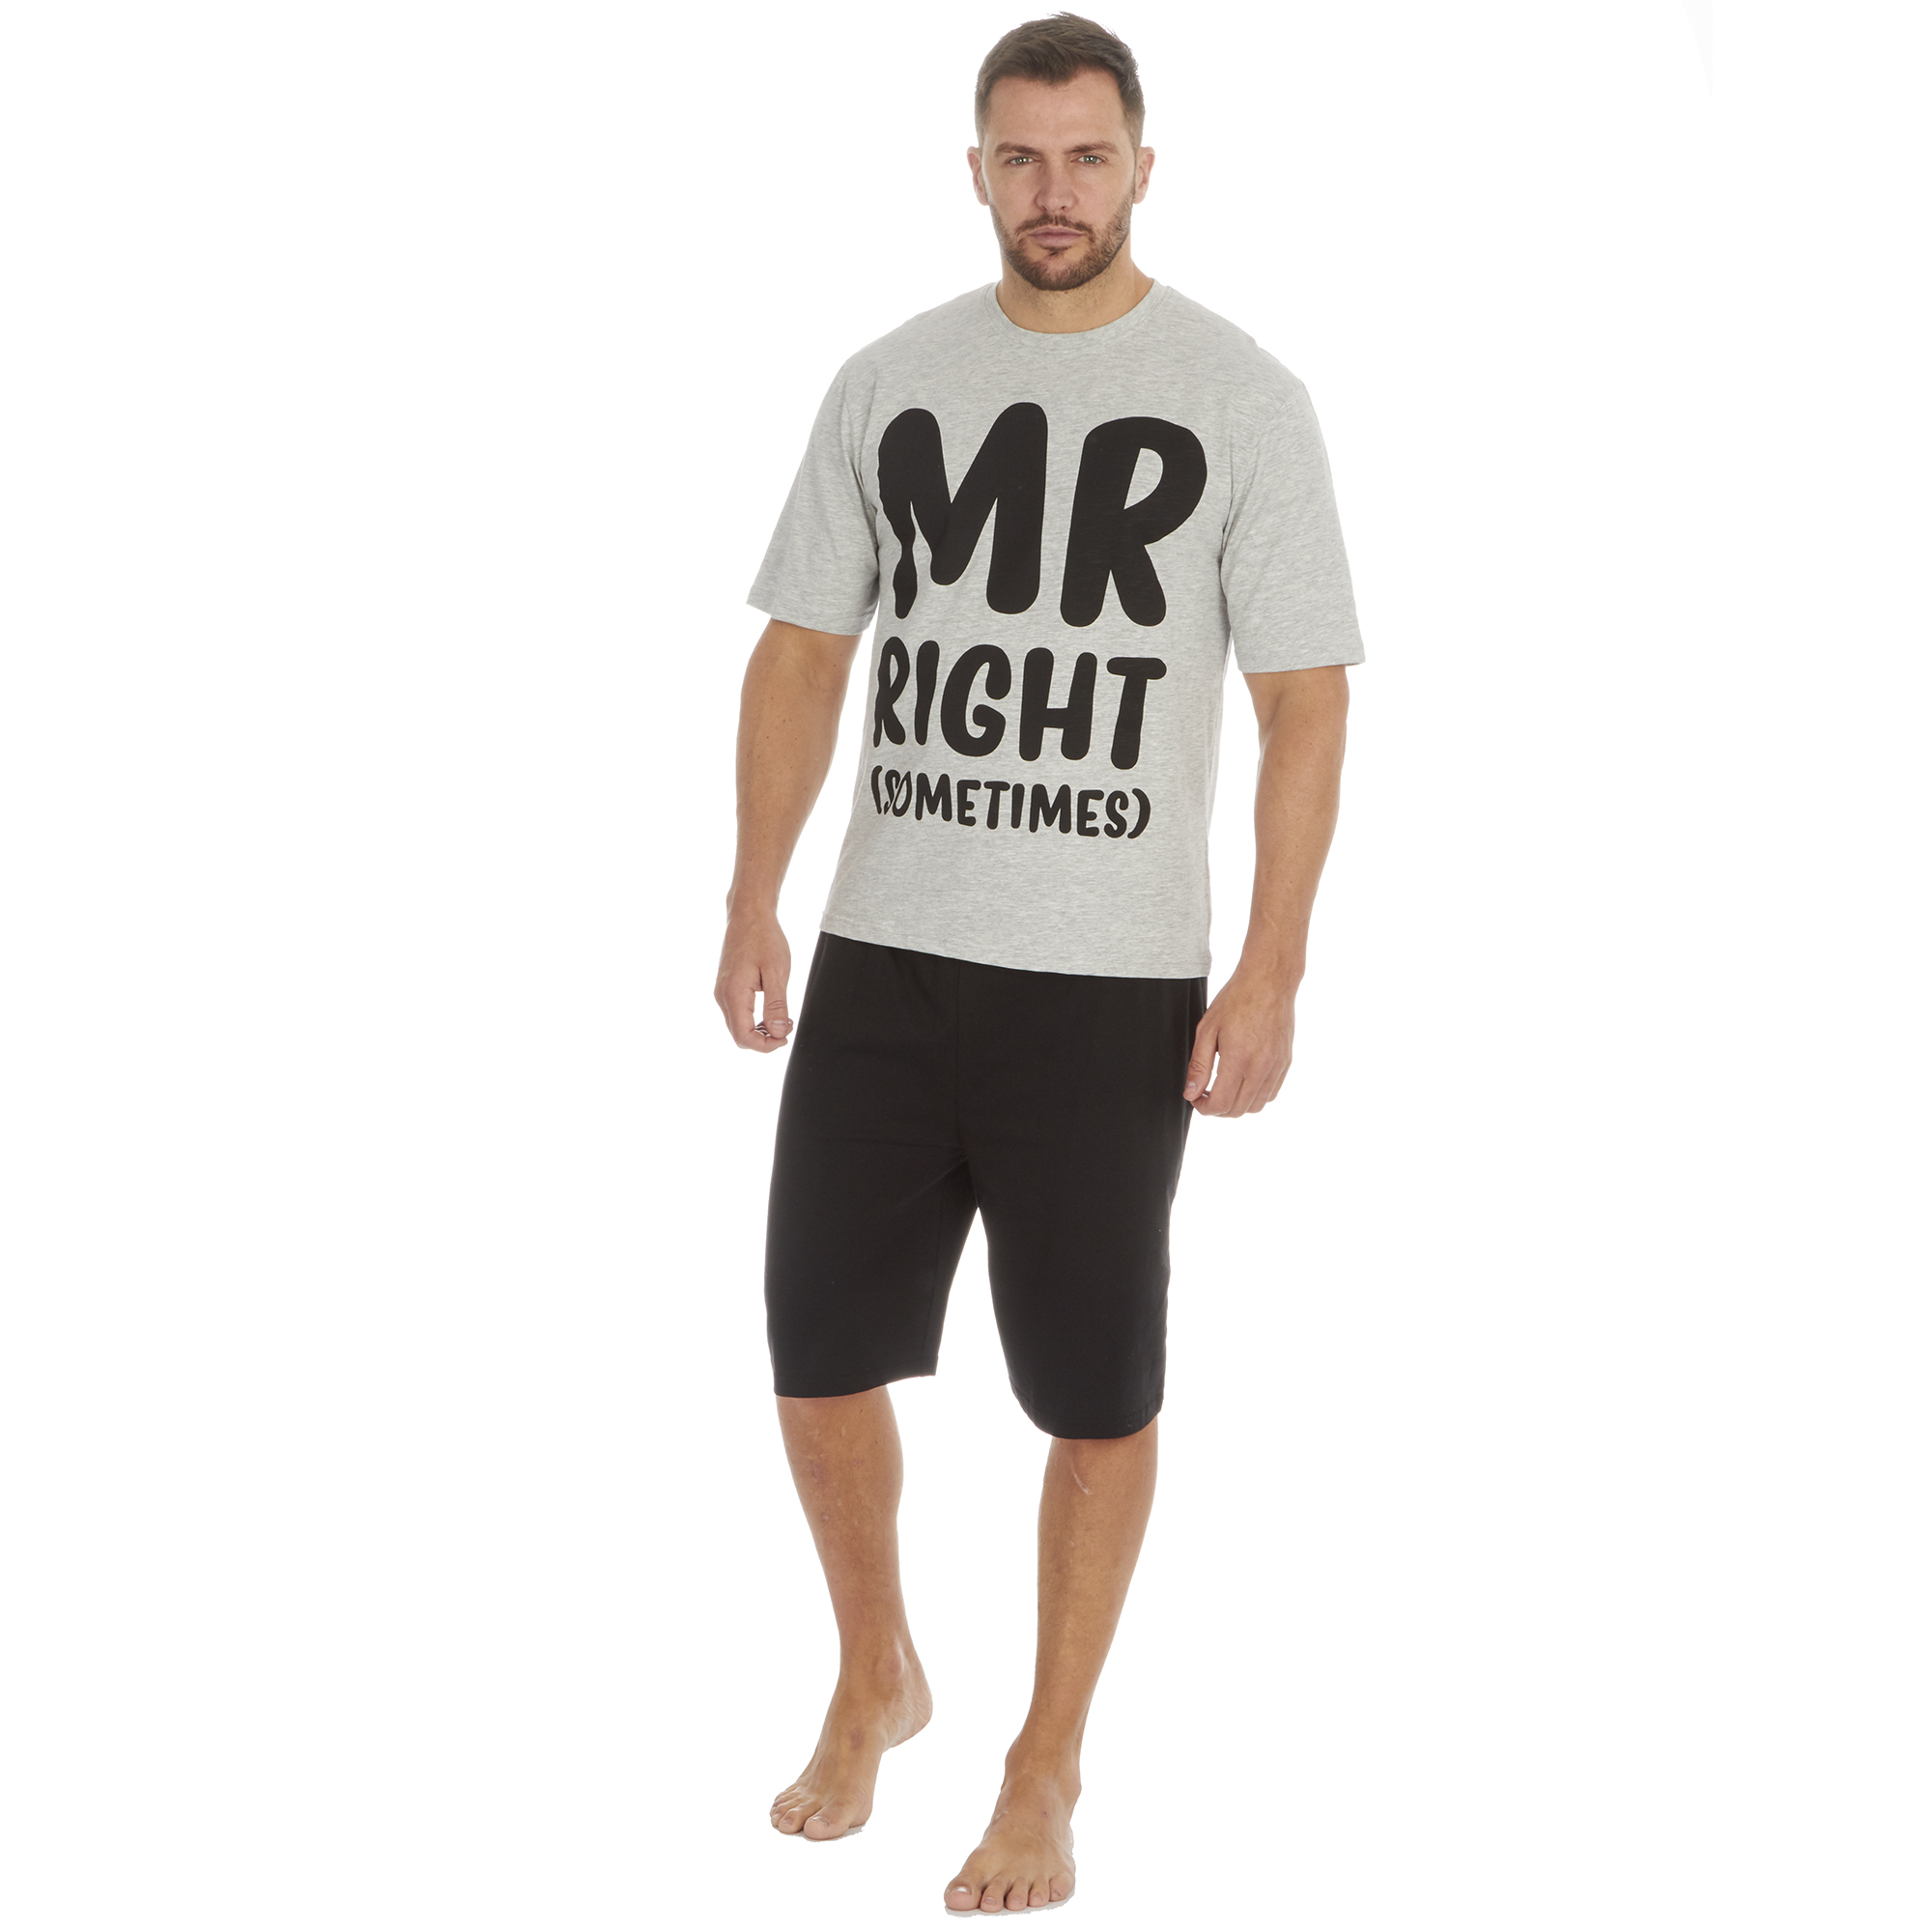 Mens ‘Mr Sometimes Right’ Shorts Lounge / PJ Set ~ Sml-2XL